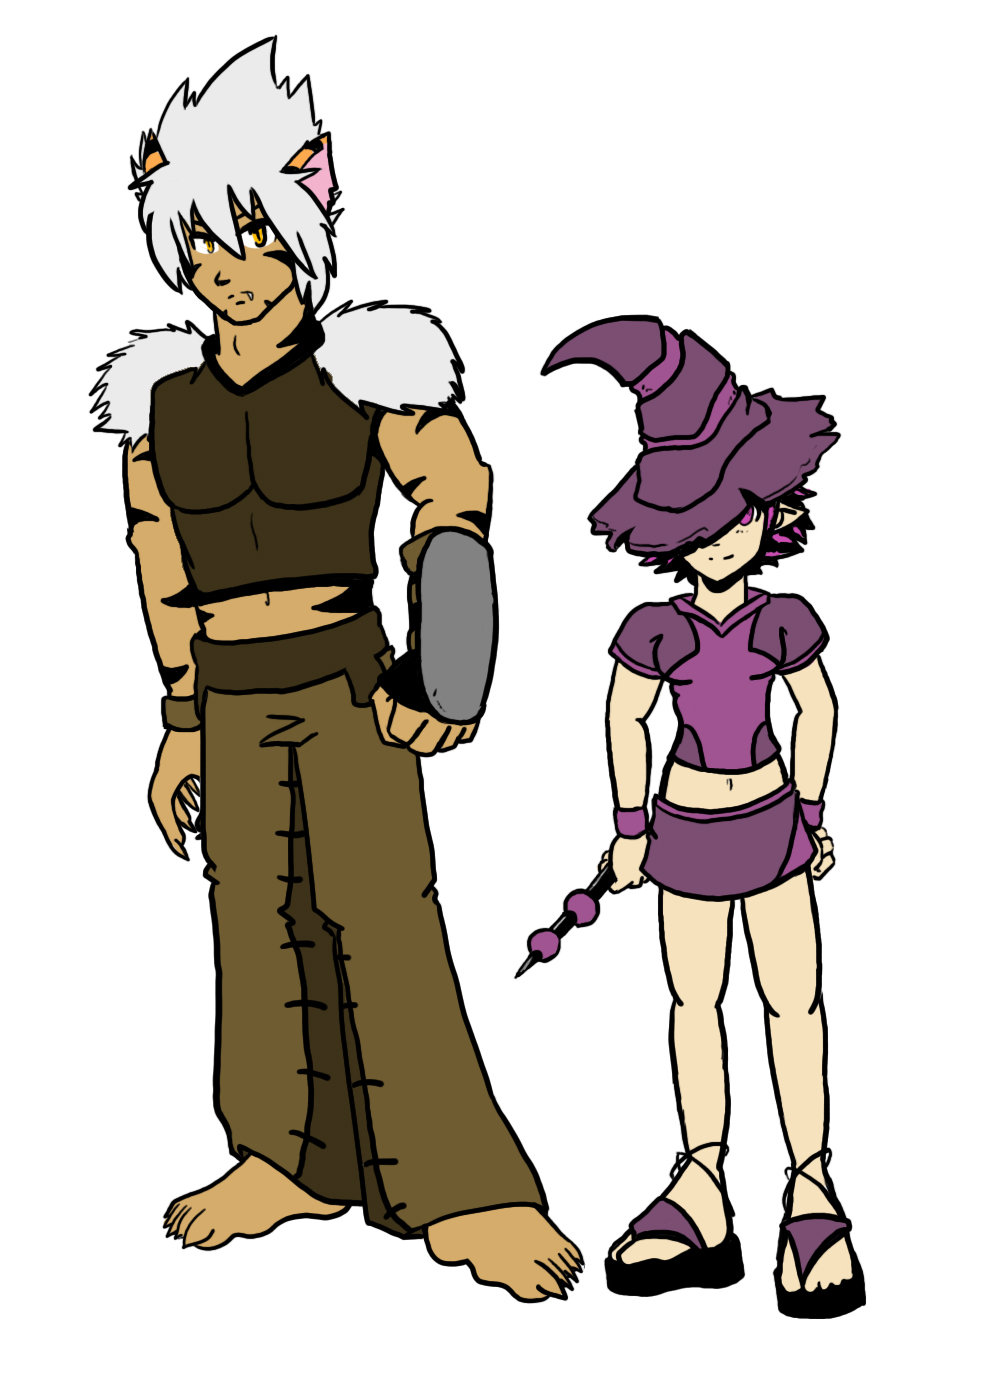 Tora and Nyla